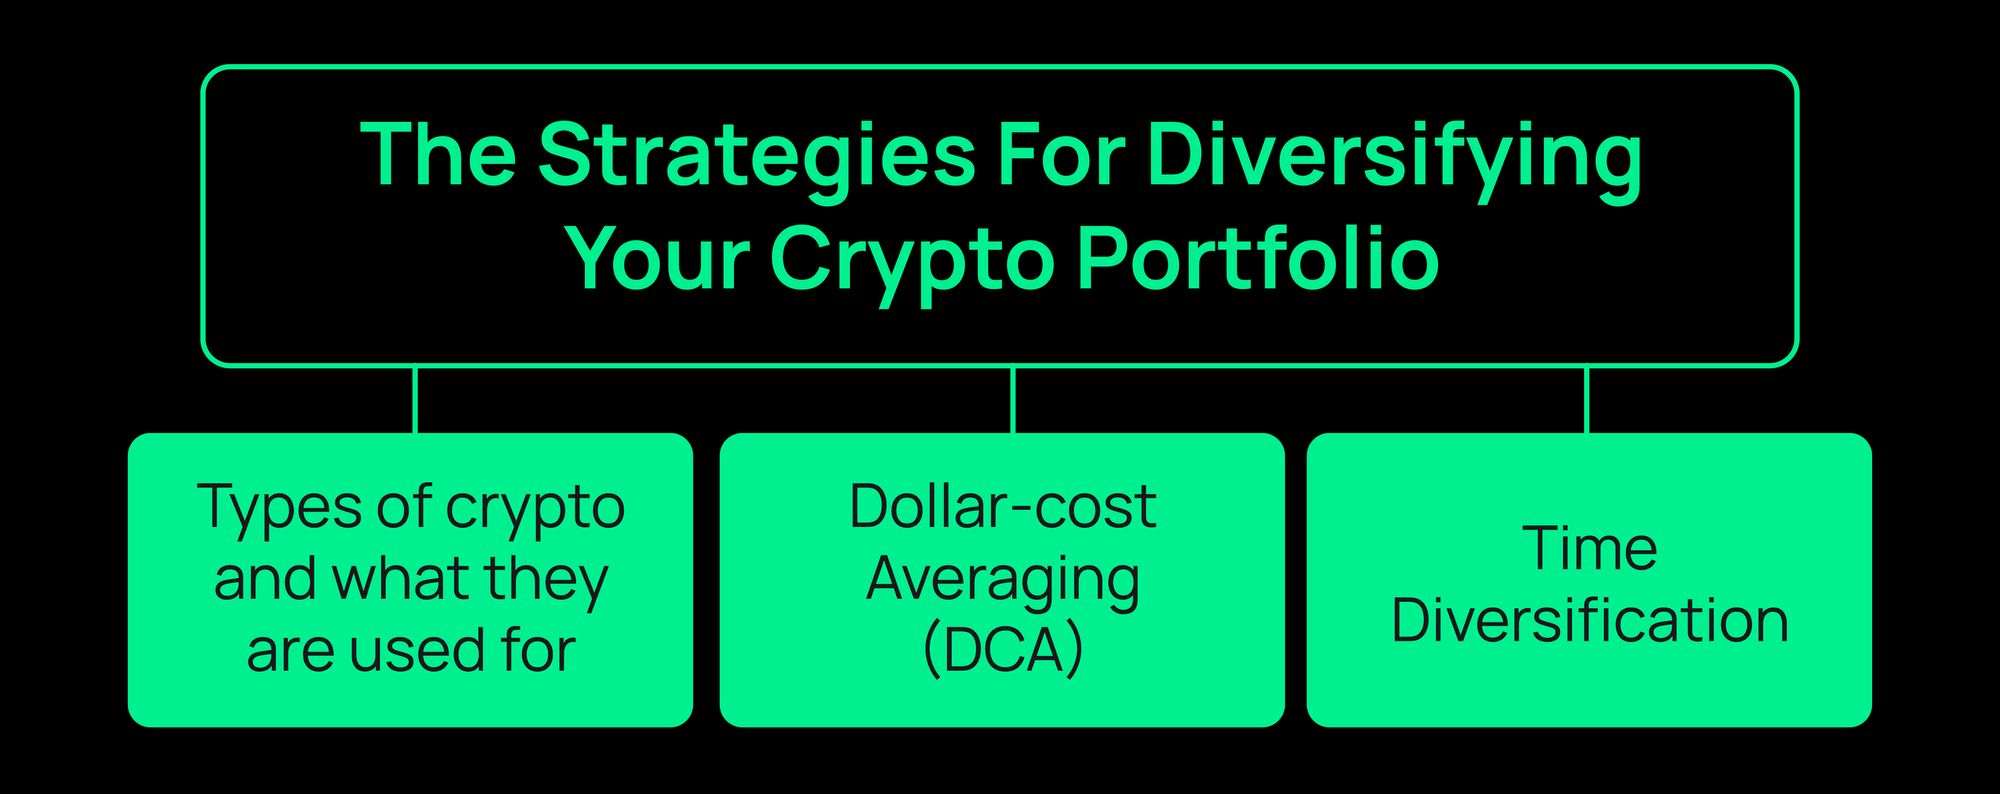 The strategies for diversifying your crypto portfolio